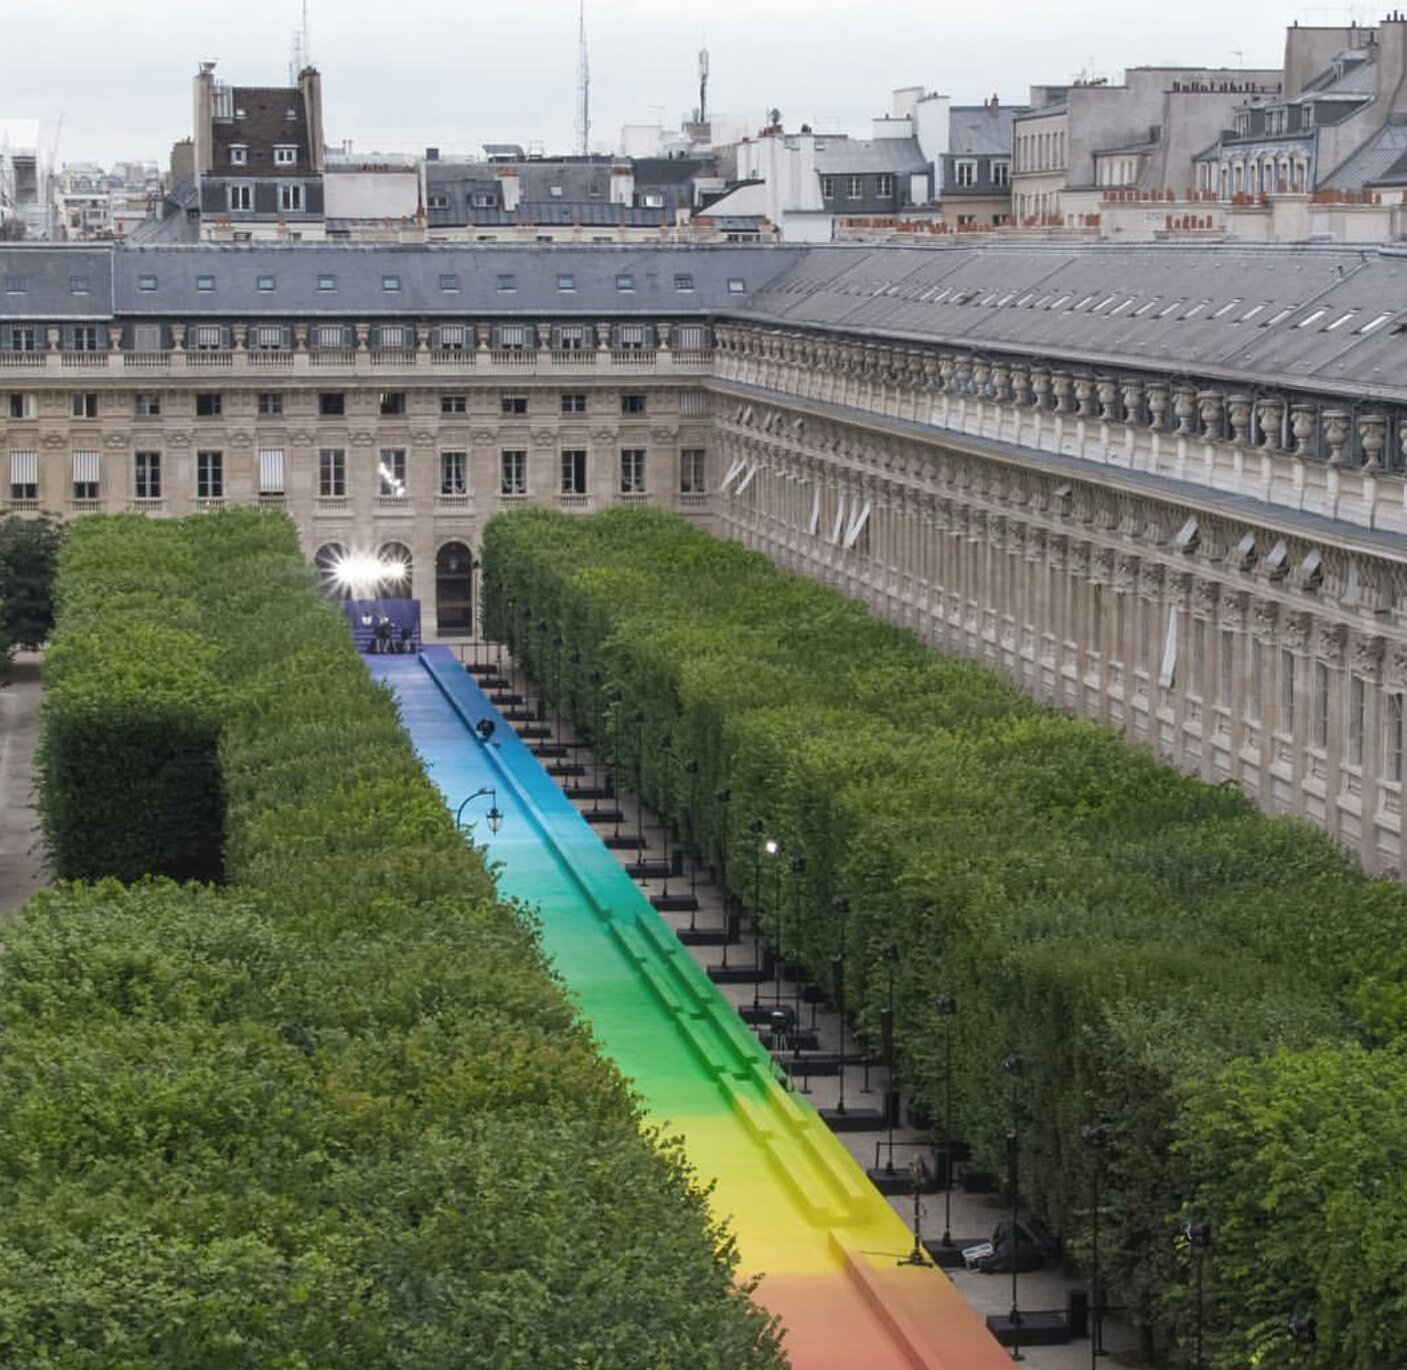 Virgil Abloh makes debut for Louis Vuitton on rainbow runway in Paris